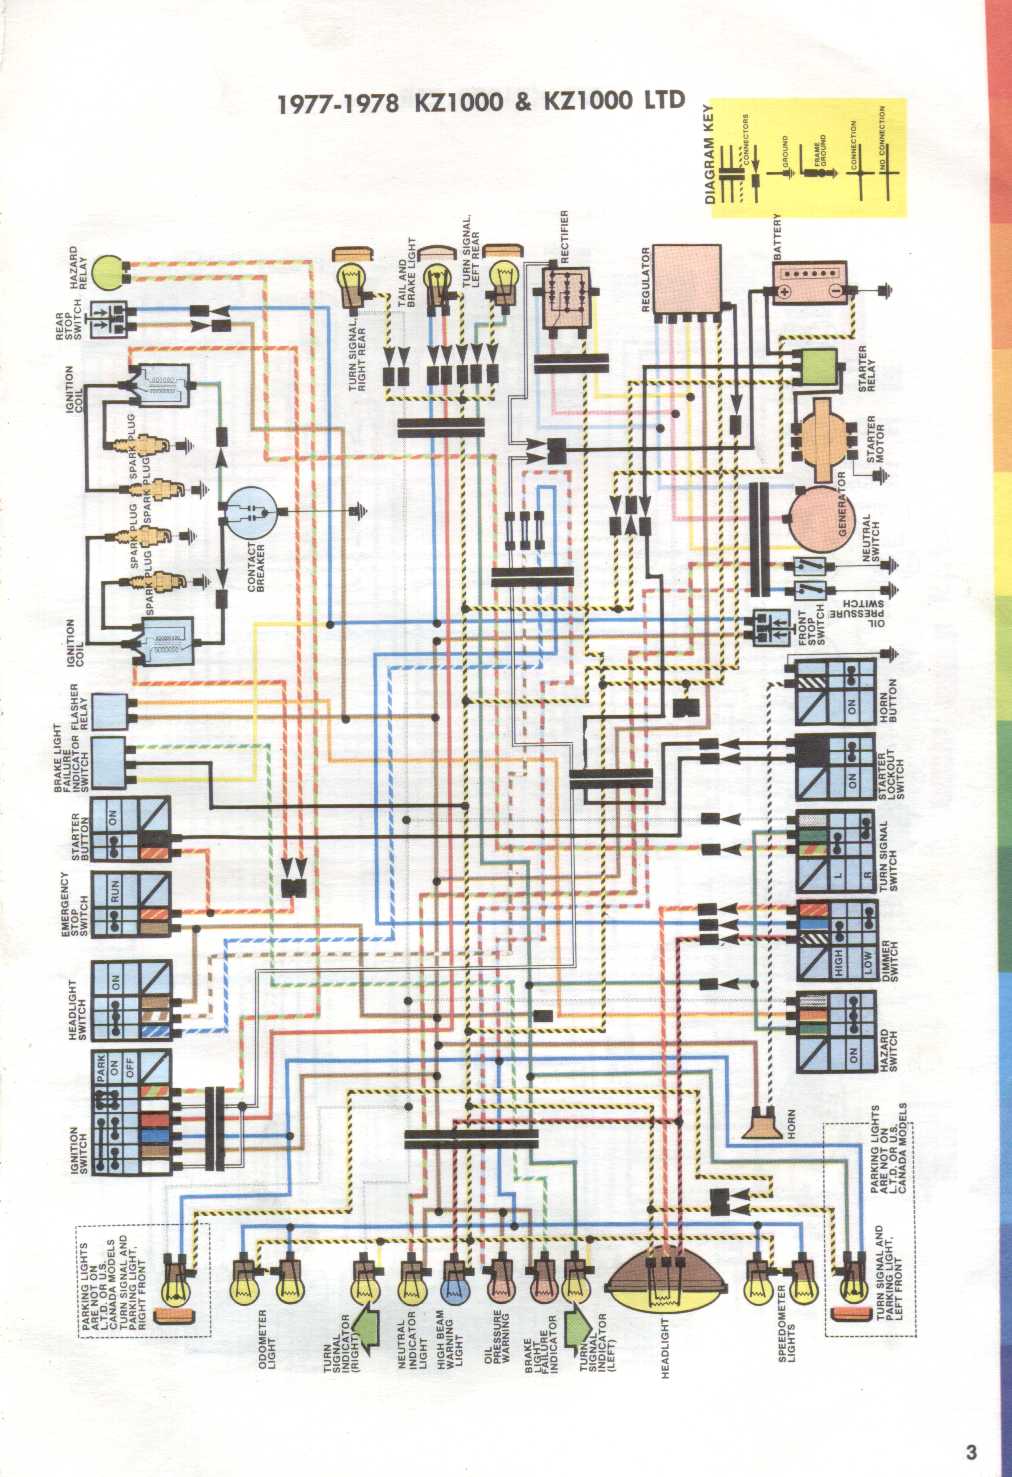 Kawasaki_KZ1000-LTD_Wiring_Diagram_1977-1978.jpg